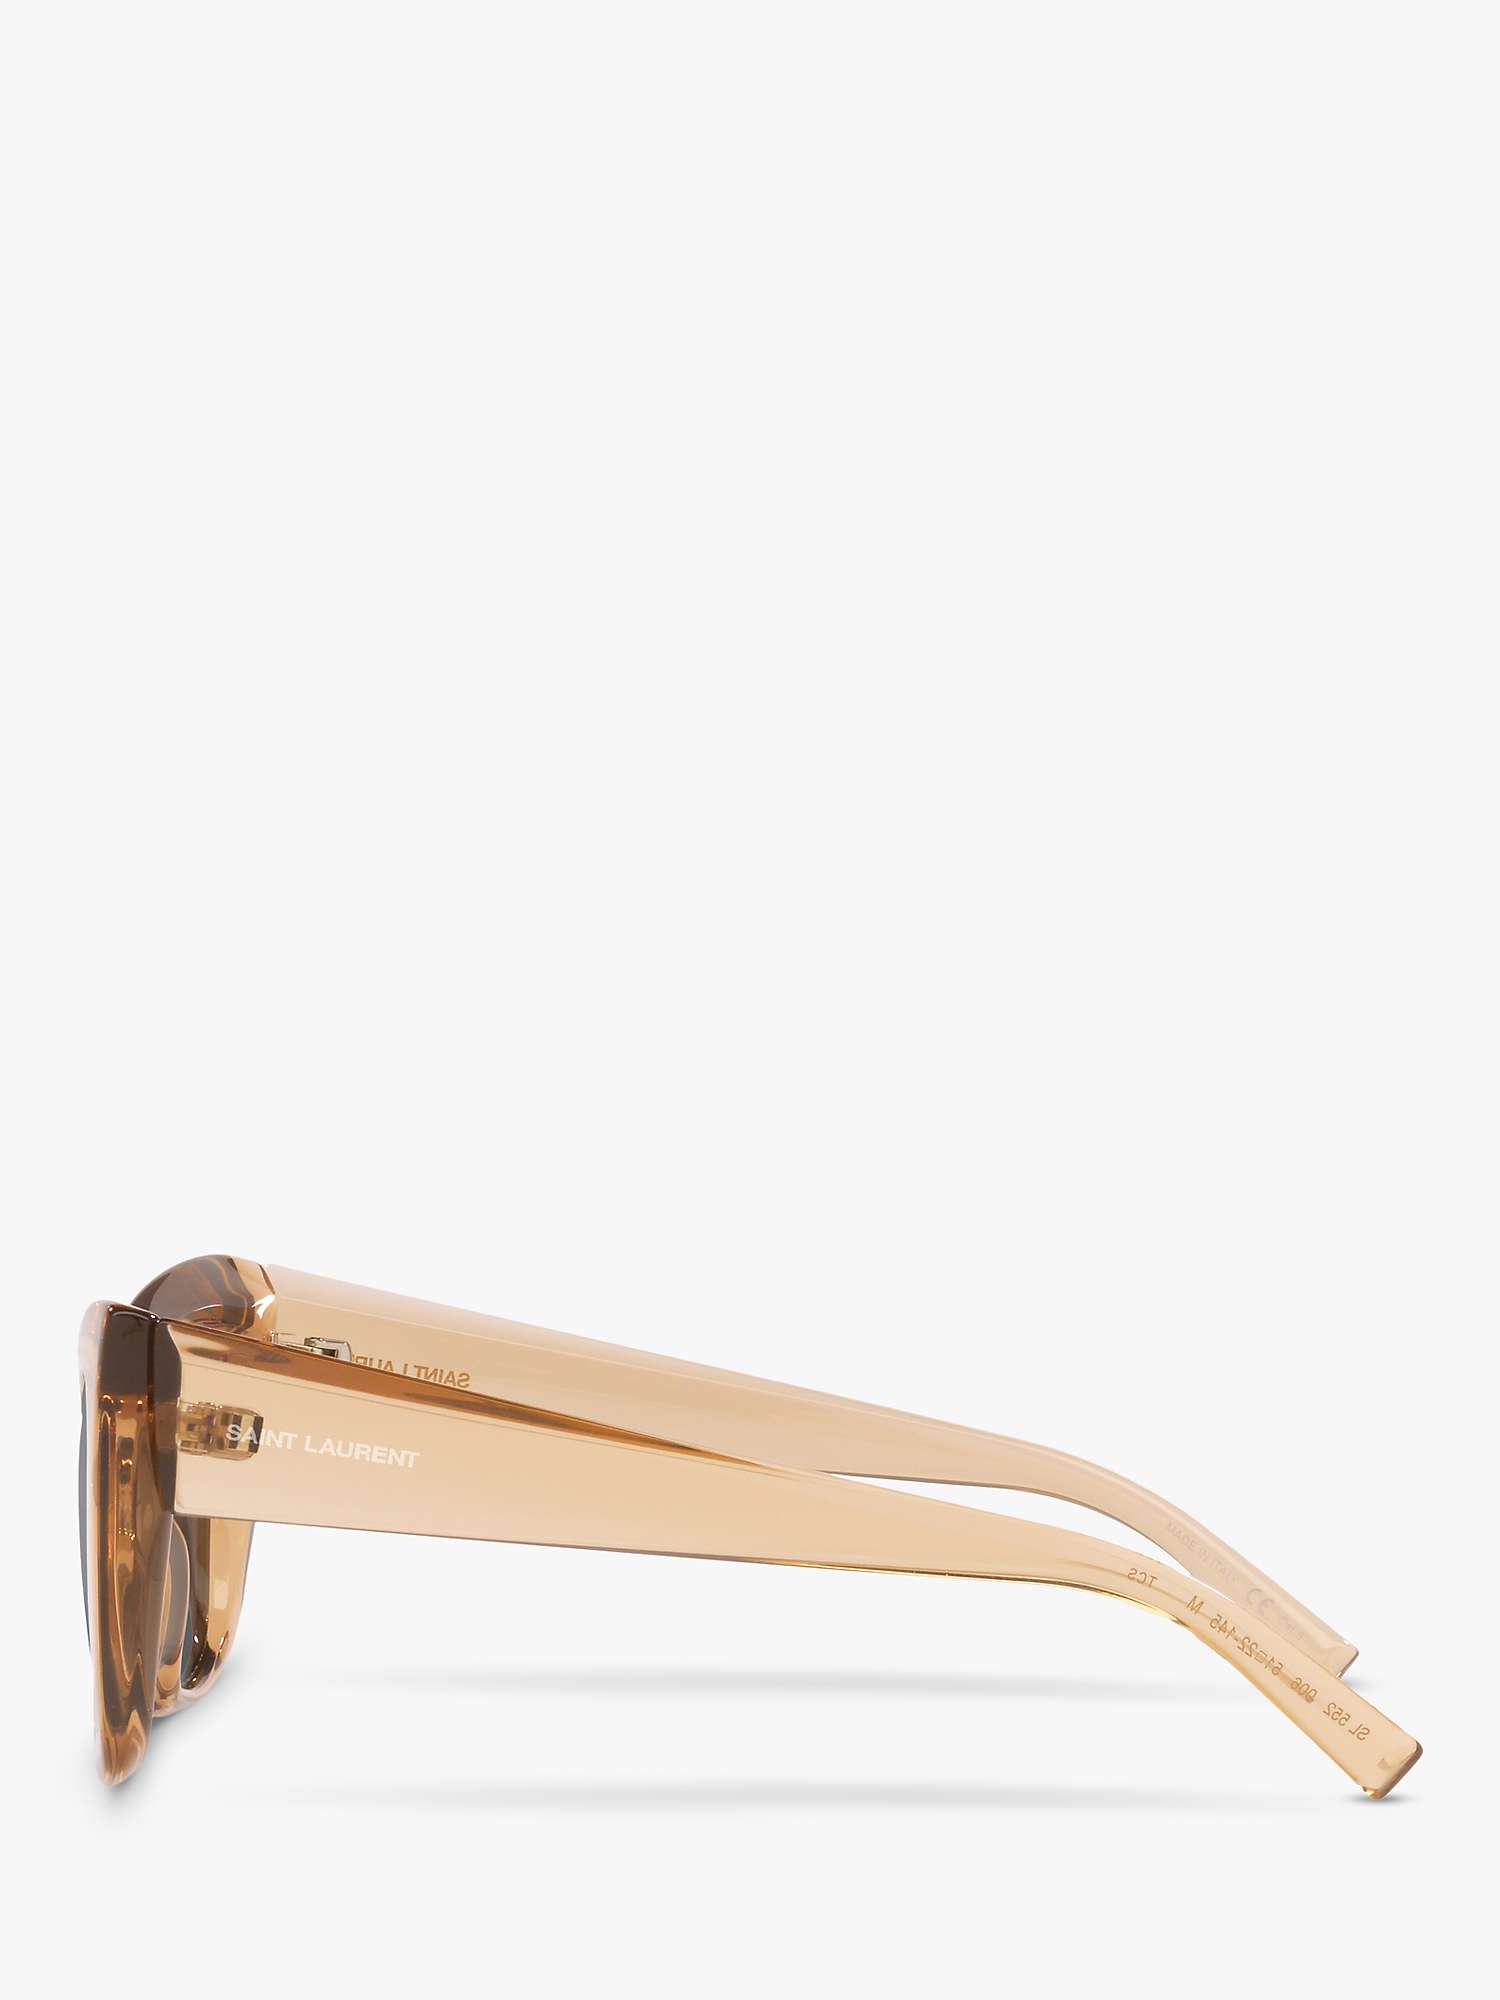 Buy Yves Saint Laurent SL 552 Women's Cat's Eye Sunglasses, Clear Pink/Grey Online at johnlewis.com